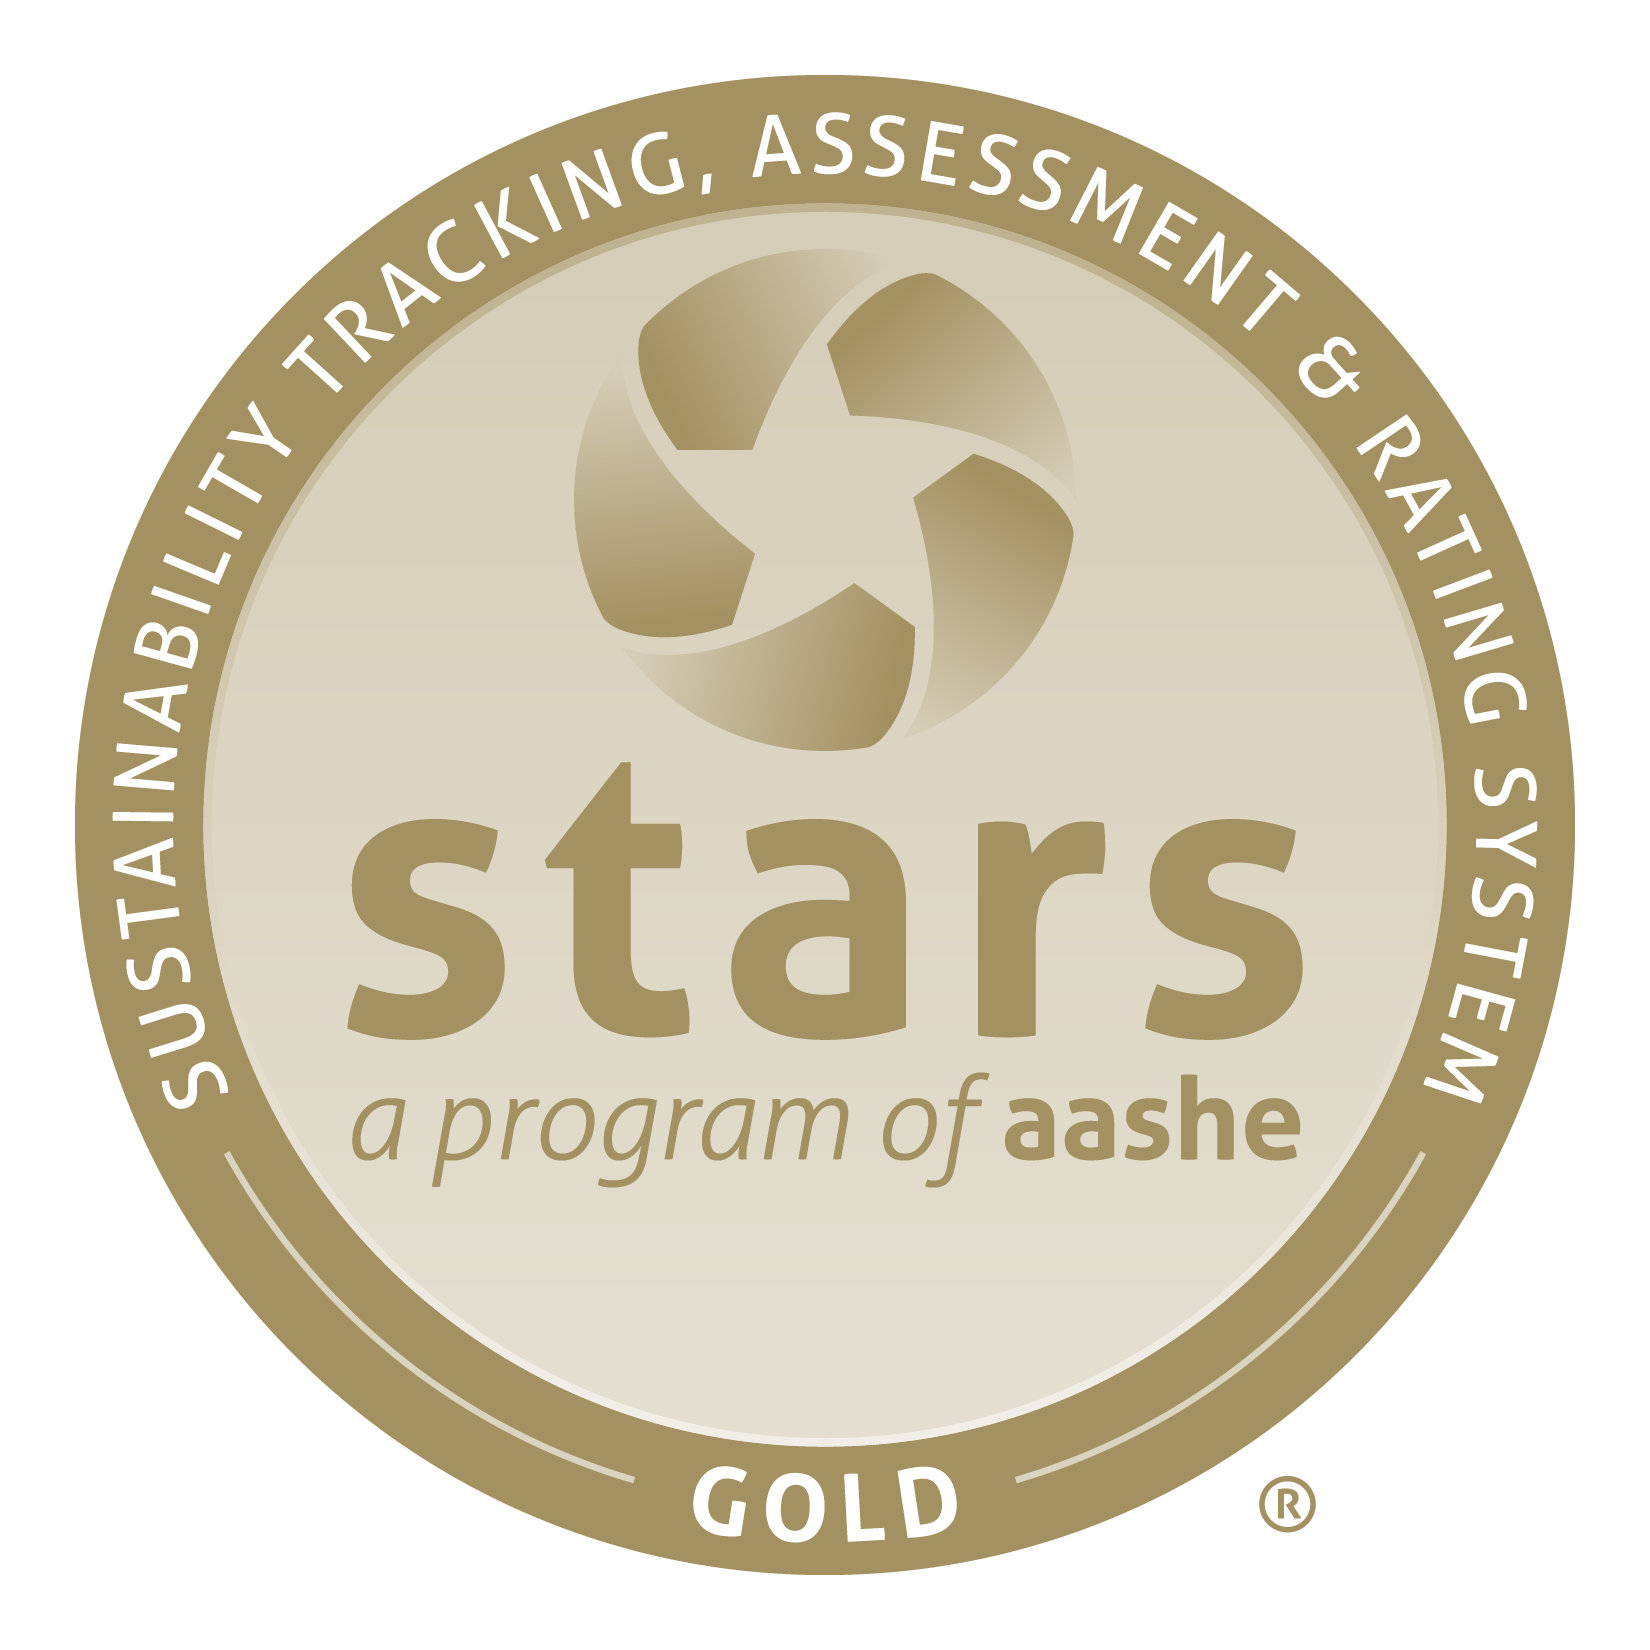 STARS seal gold rating.